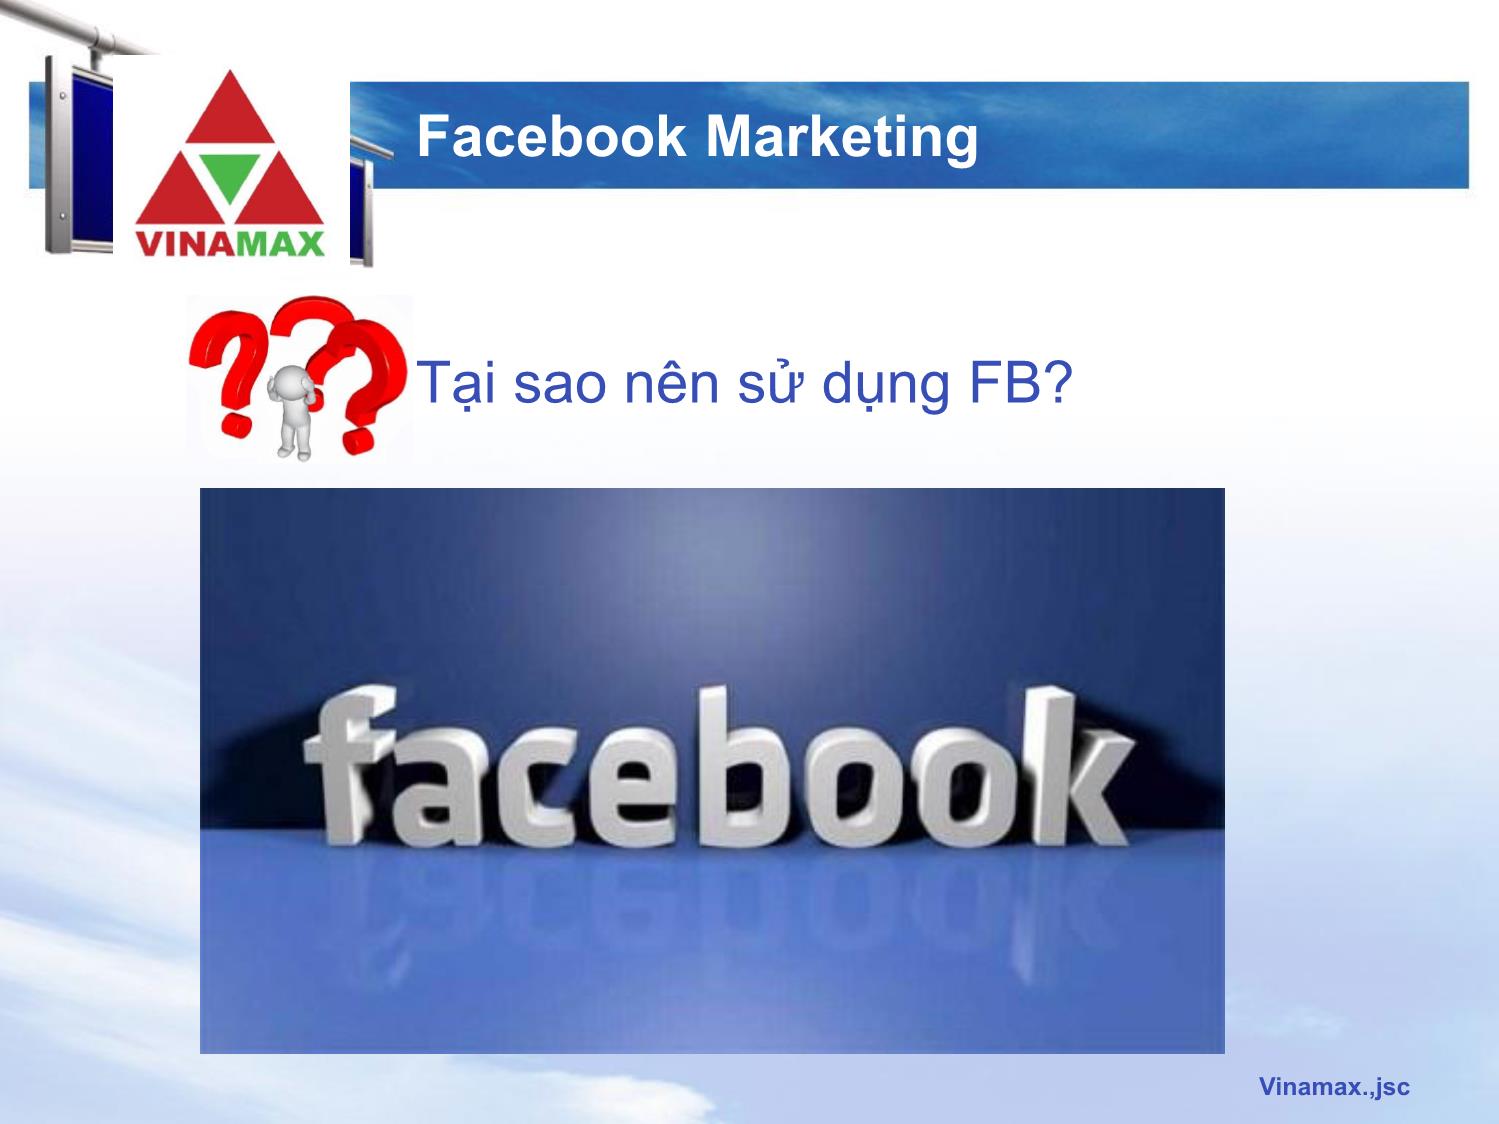 Facebook Marketing trang 2